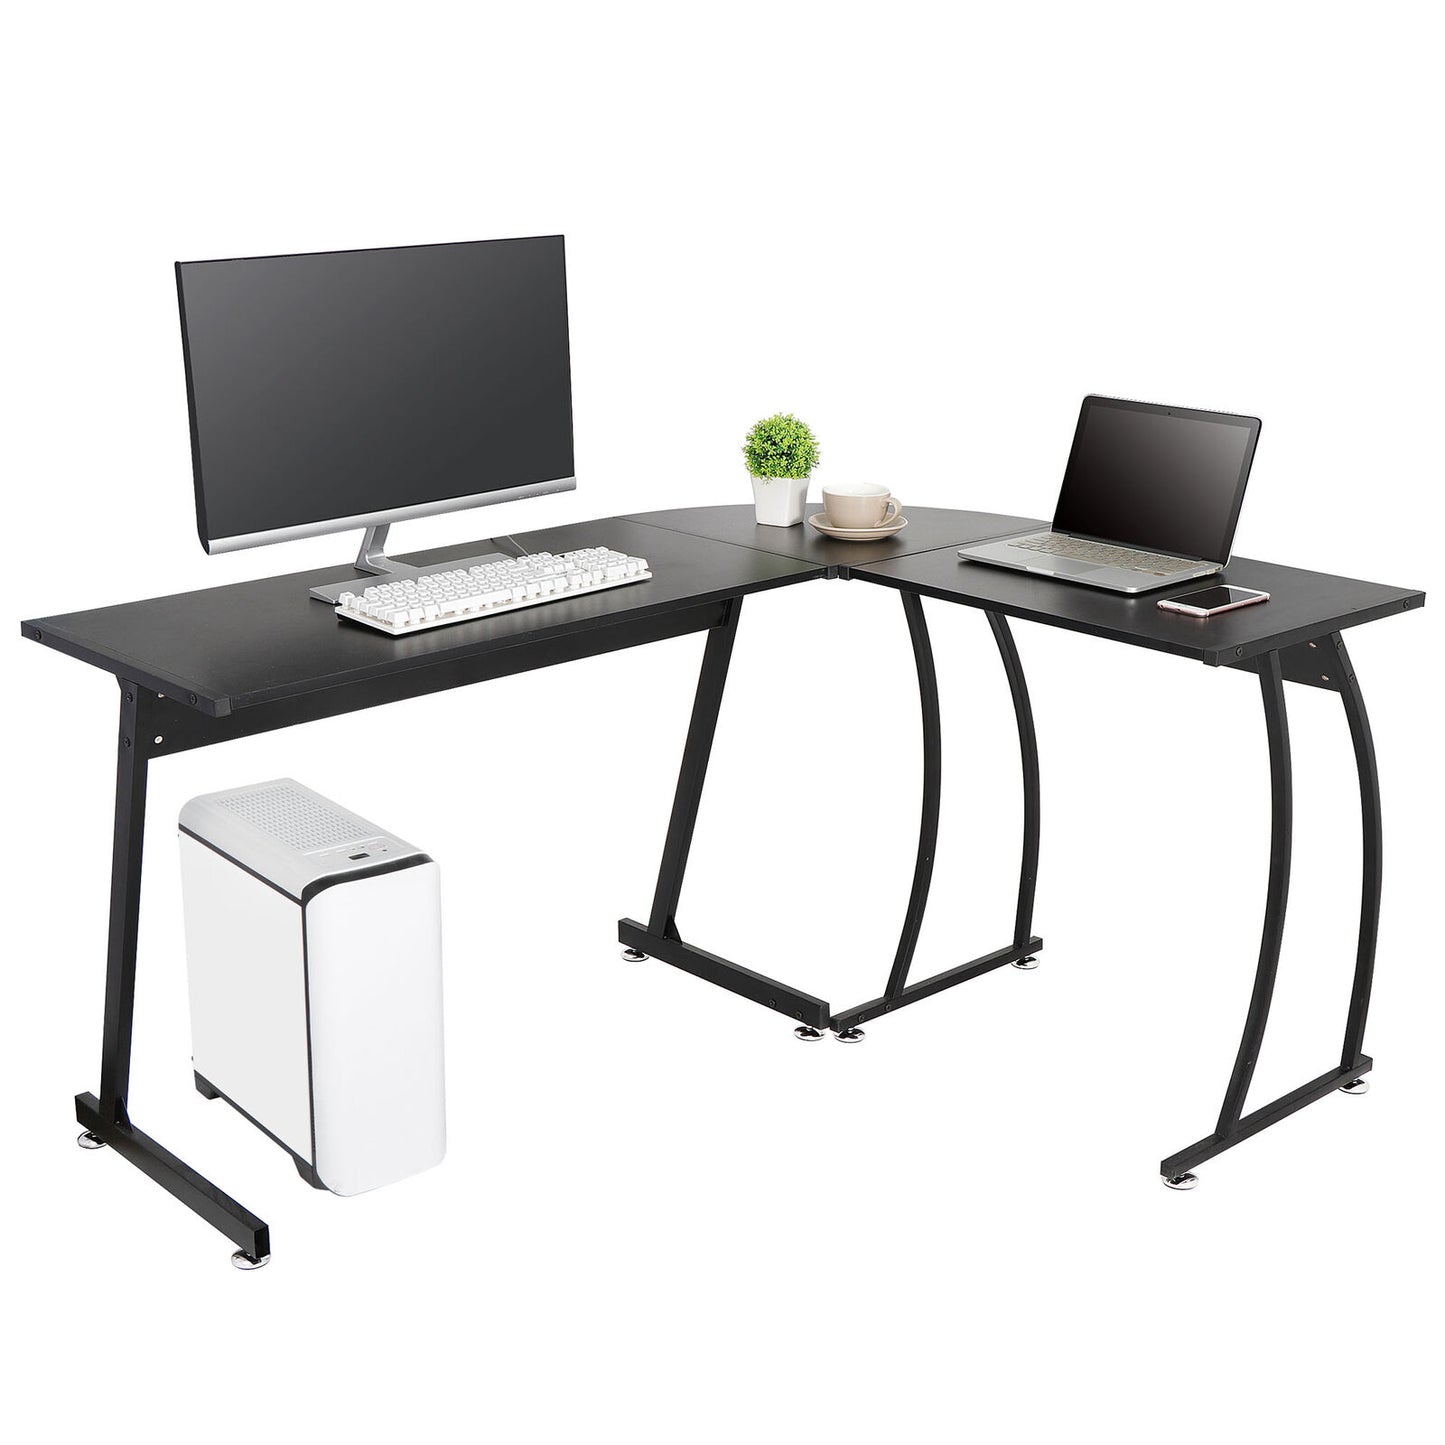 58"L-Shaped Corner Desk Computer Desk Gaming Desk PC Writting Table Home Office